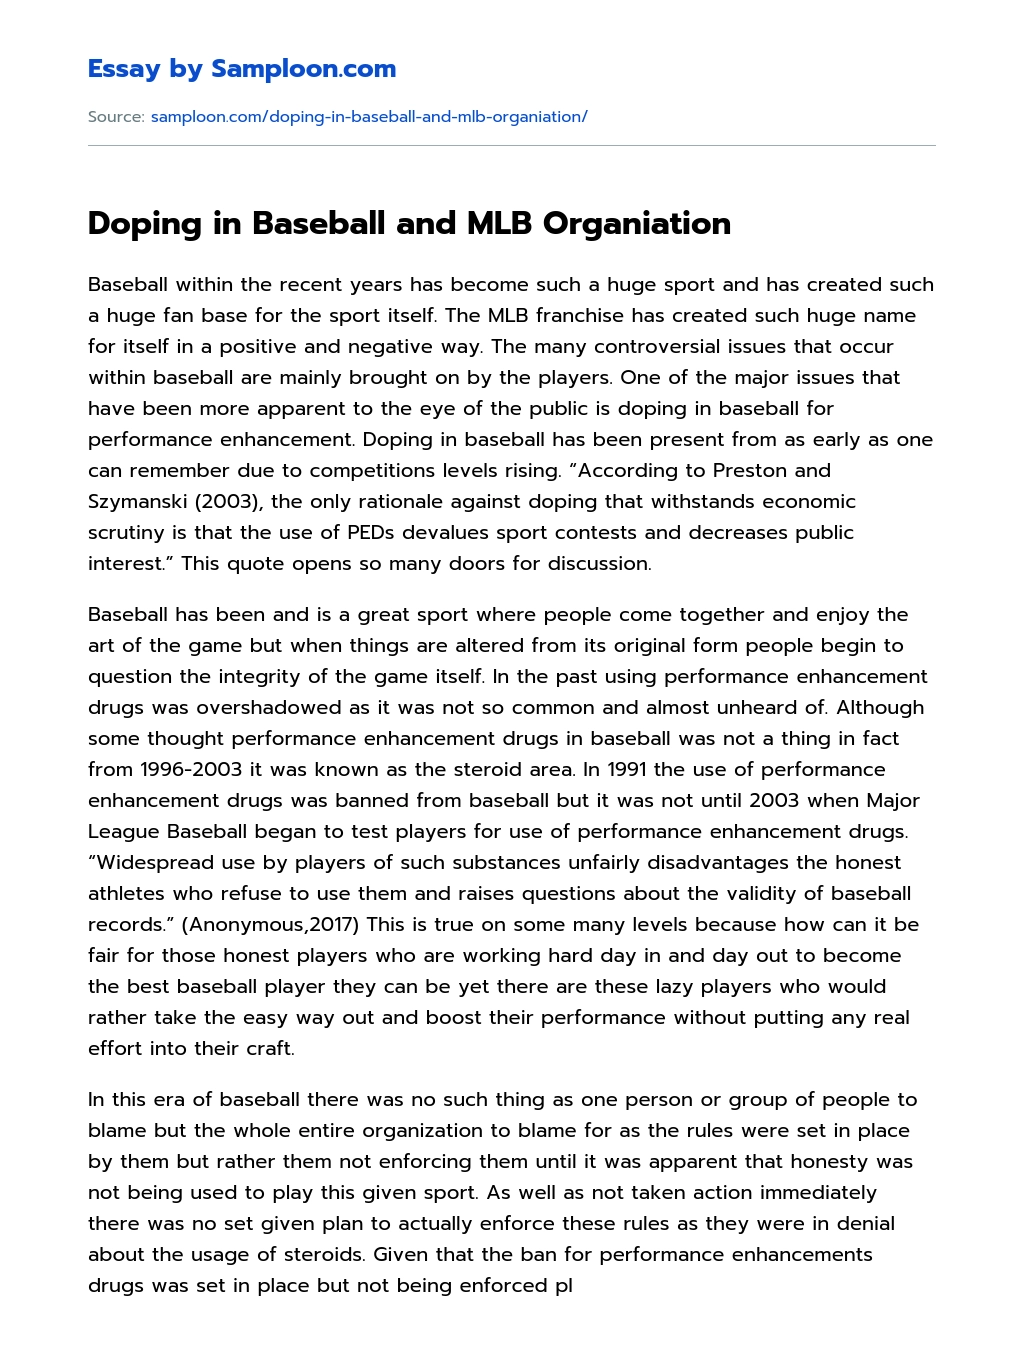 Doping in Baseball and MLB Organiation essay